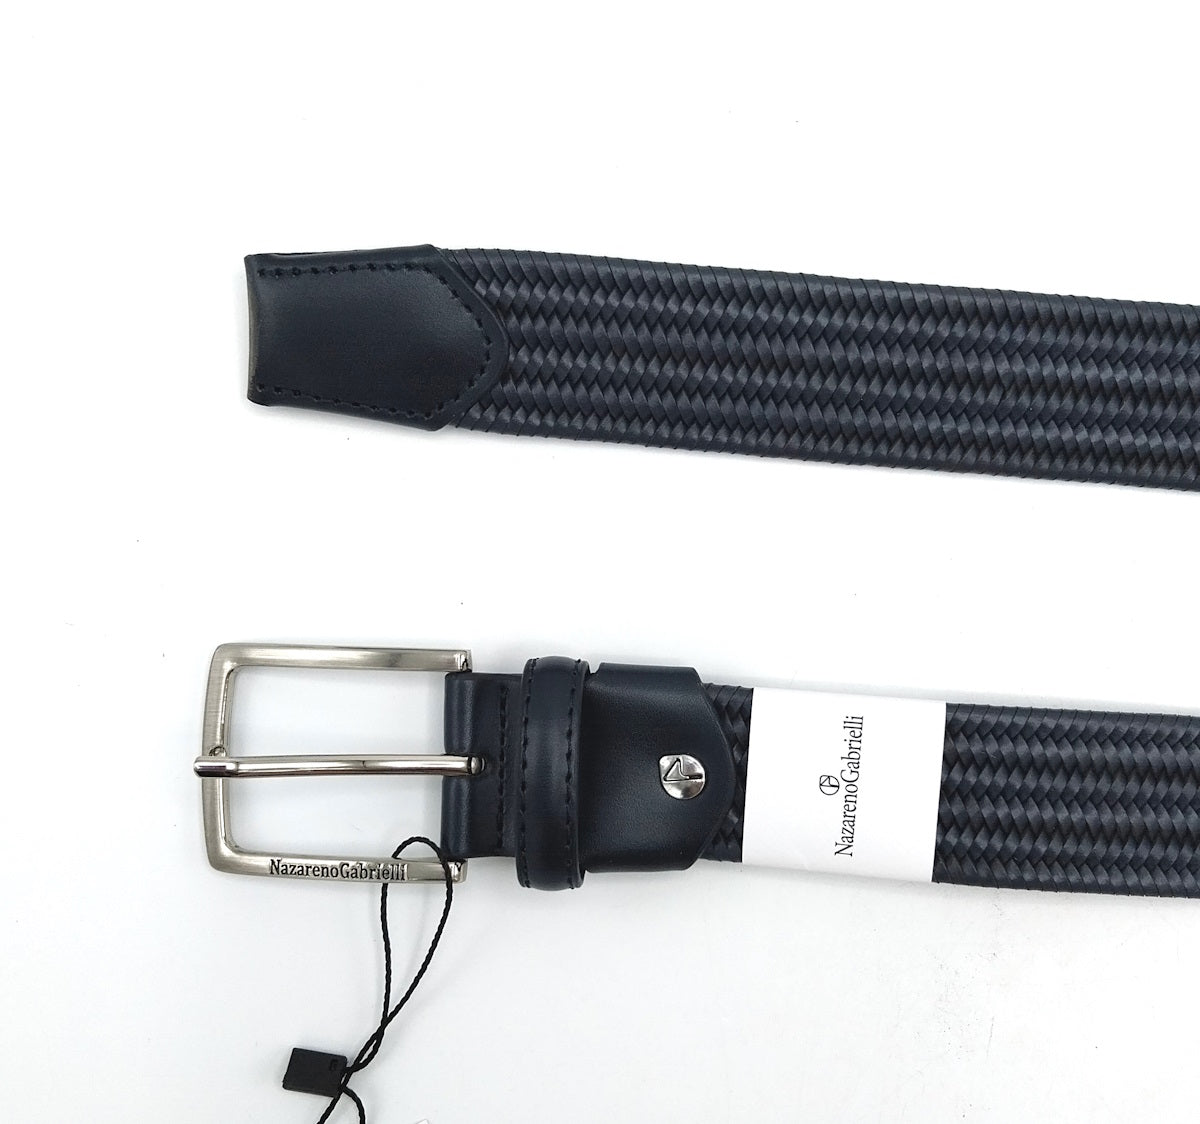 Genuine leather elastic belt, N.Gabrielli, art. IDK692/35